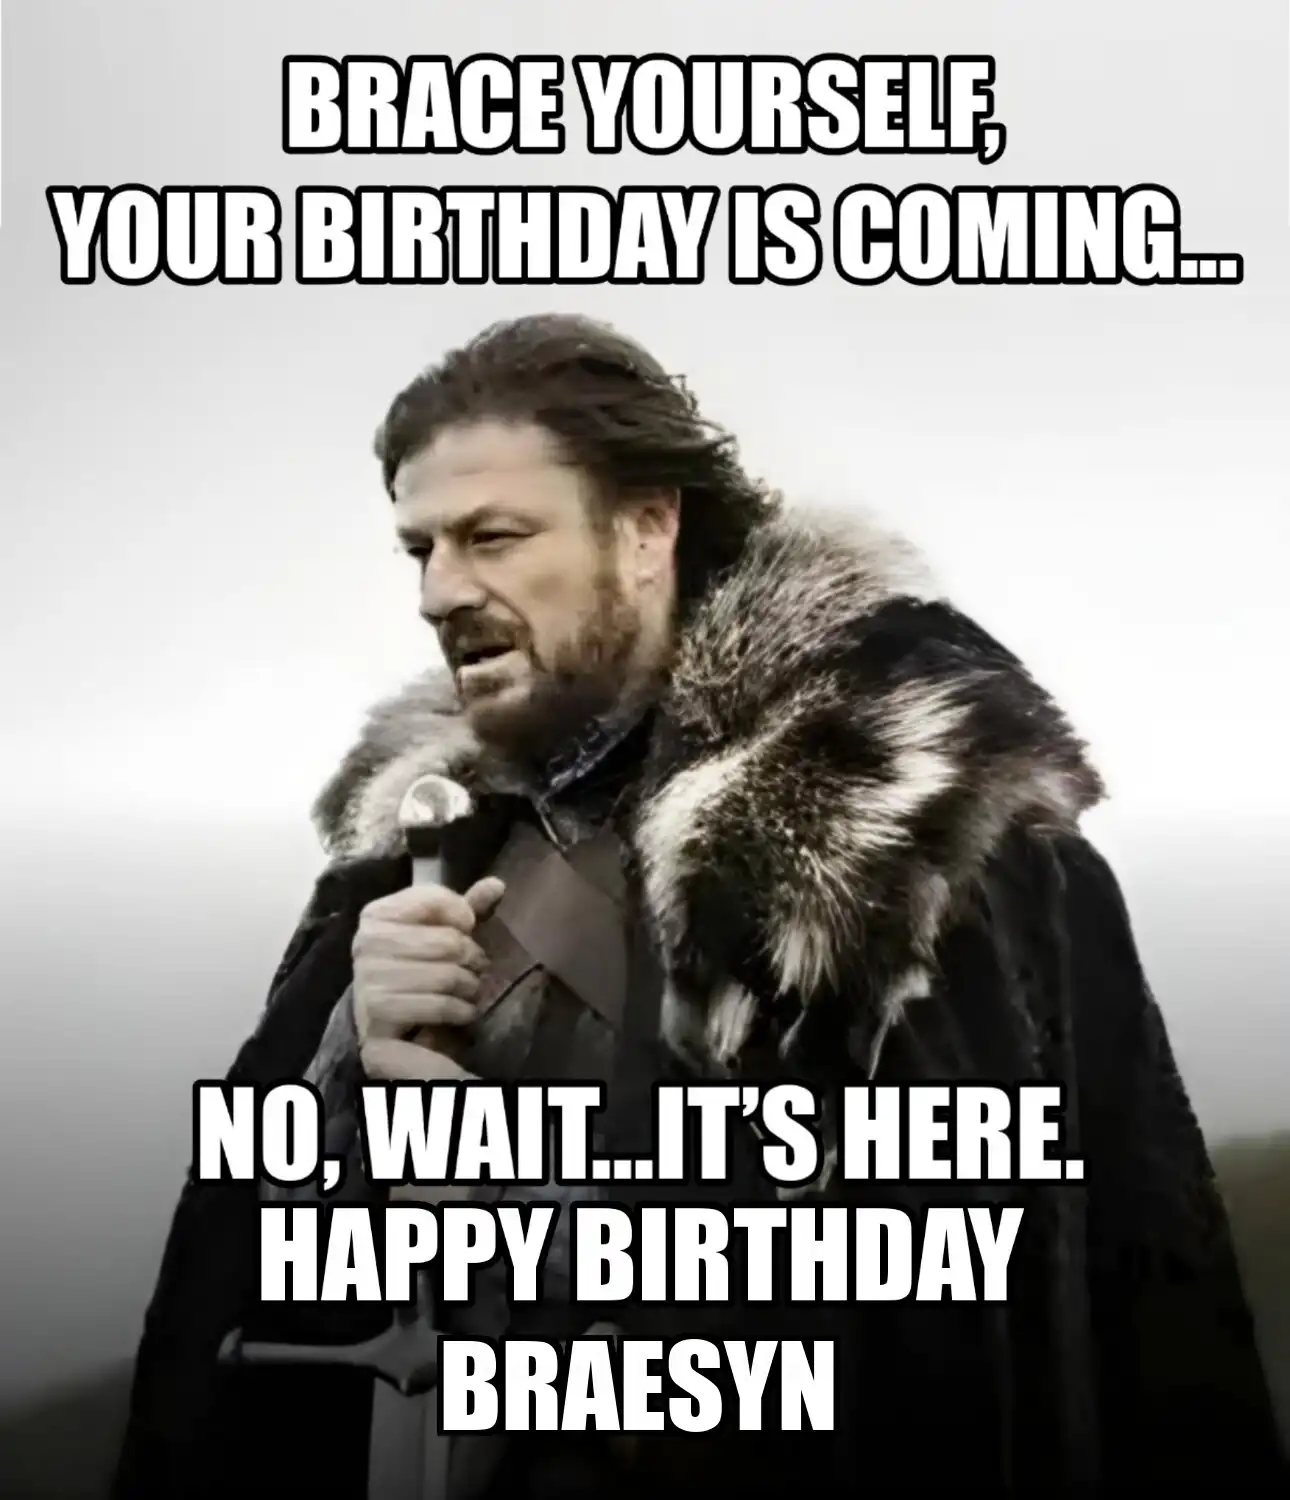 Happy Birthday Braesyn Brace Yourself Your Birthday Is Coming Meme